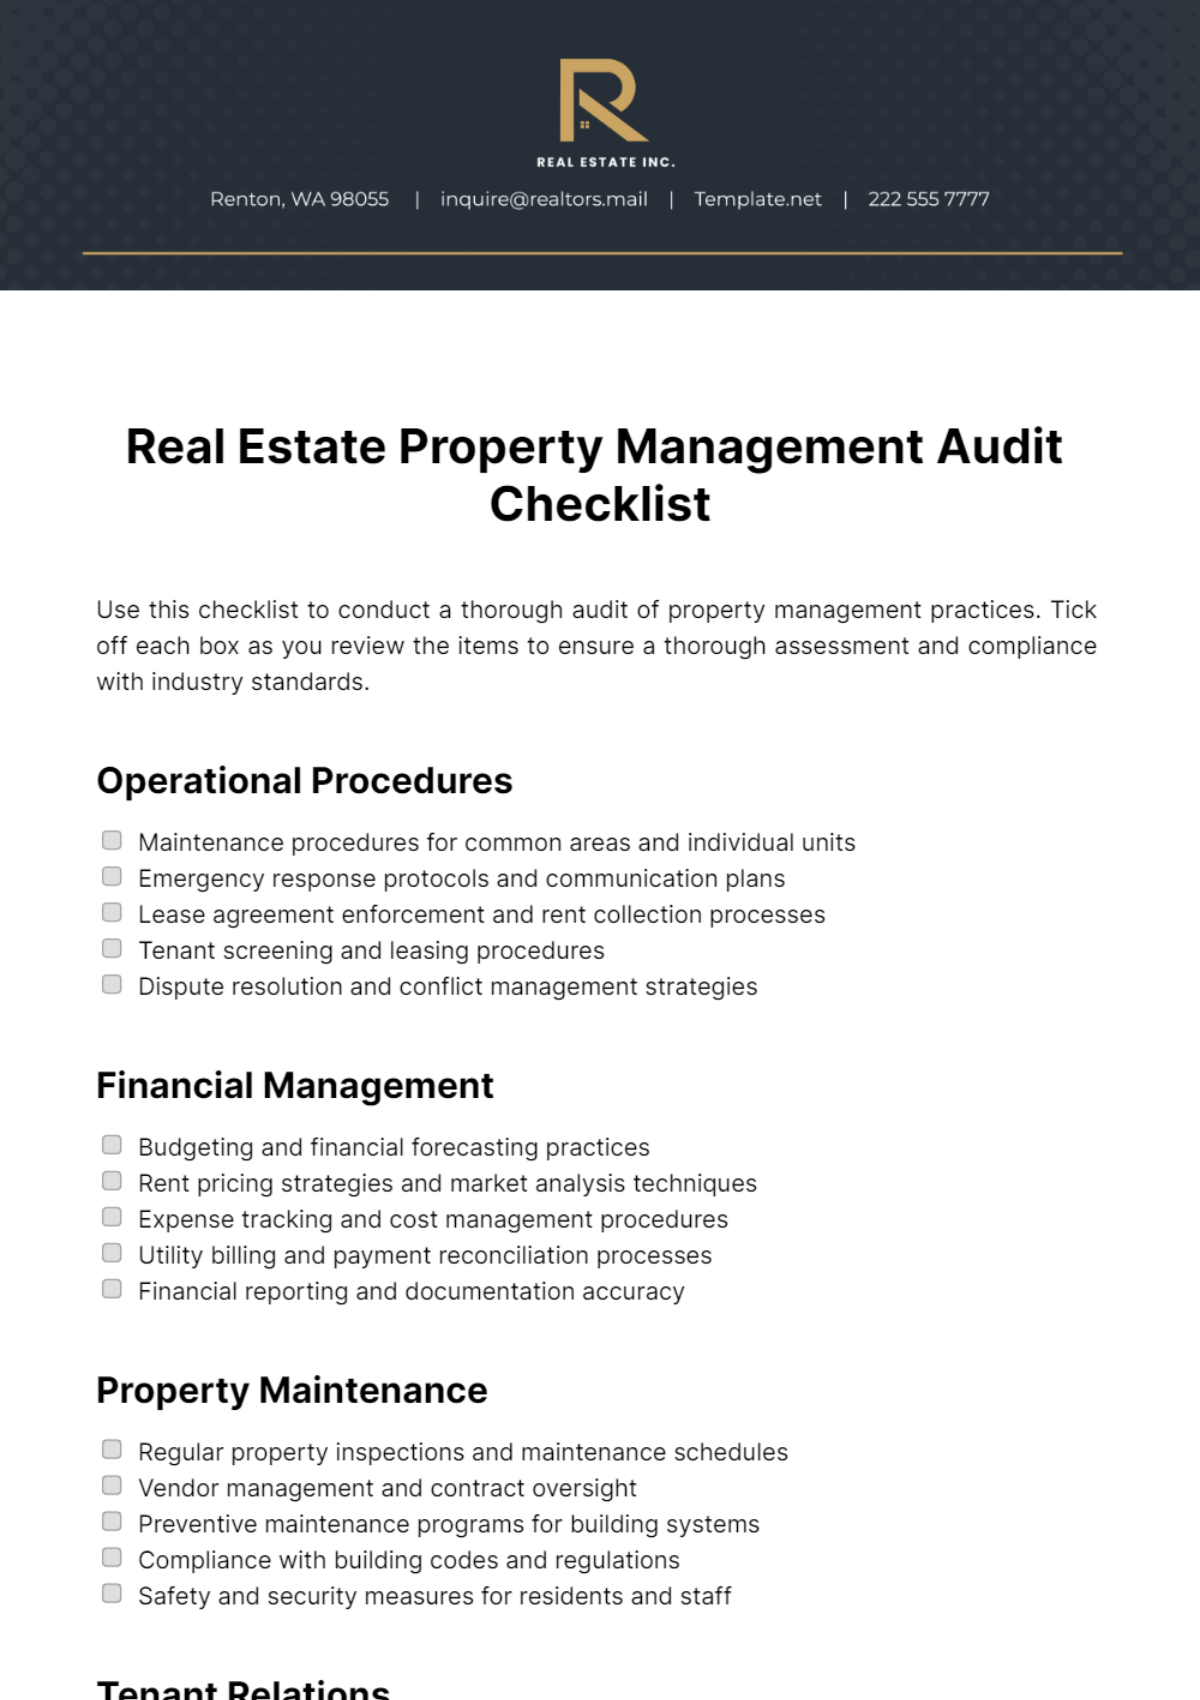 Real Estate Property Management Audit Checklist Template